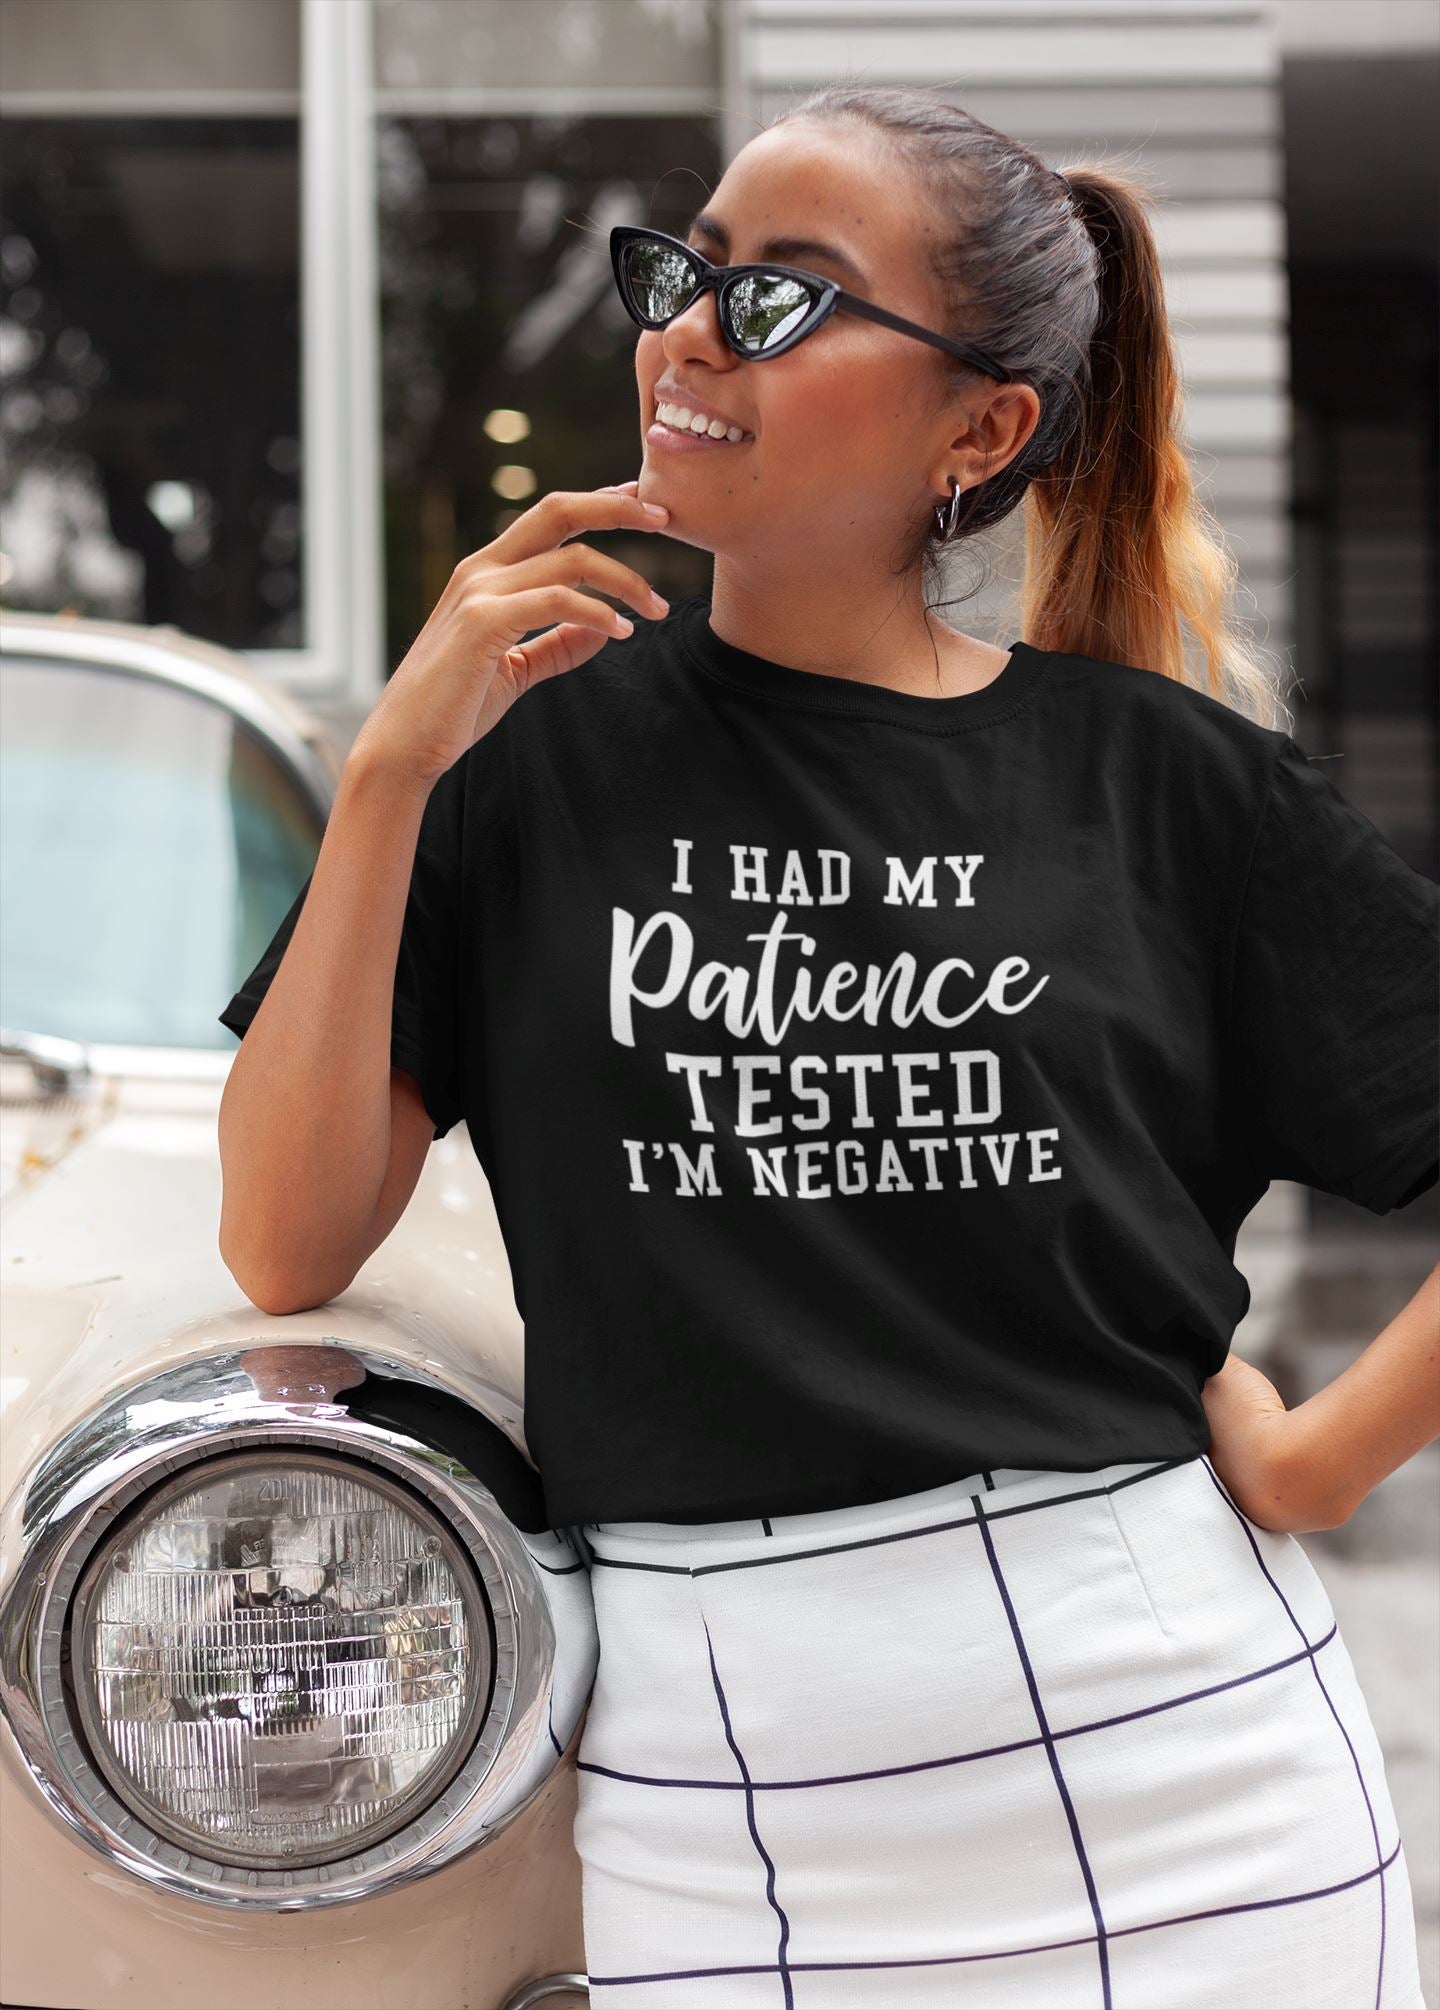 I Had My Patience Tested I'm Negative T-Shirt, Funny T-Shirt, Sarcastic T-Shirt, Sassy T-Shirt B1ack By Design LLC 